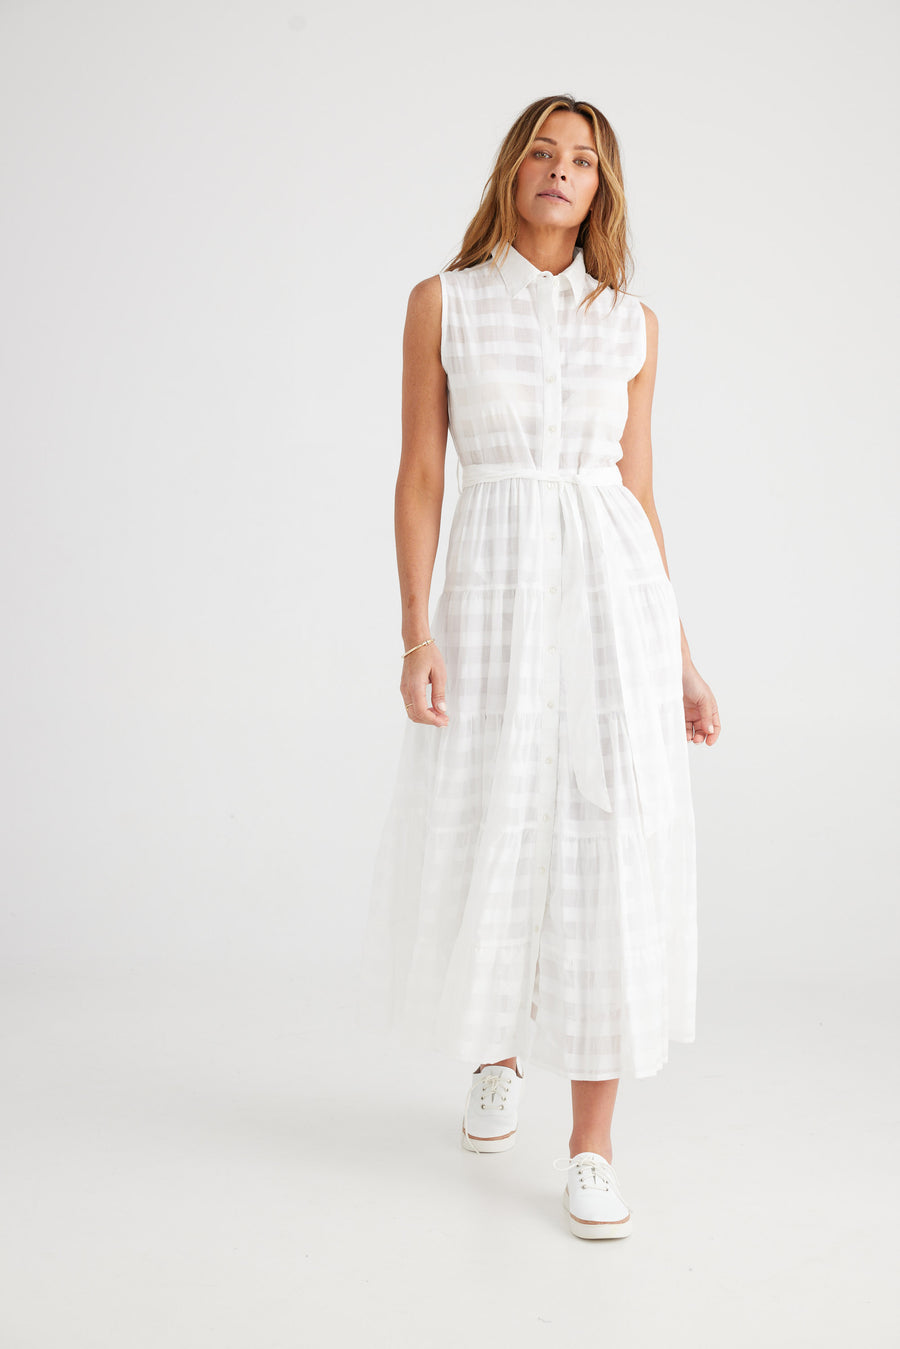 Poppy Maxi Dress - White Window Check